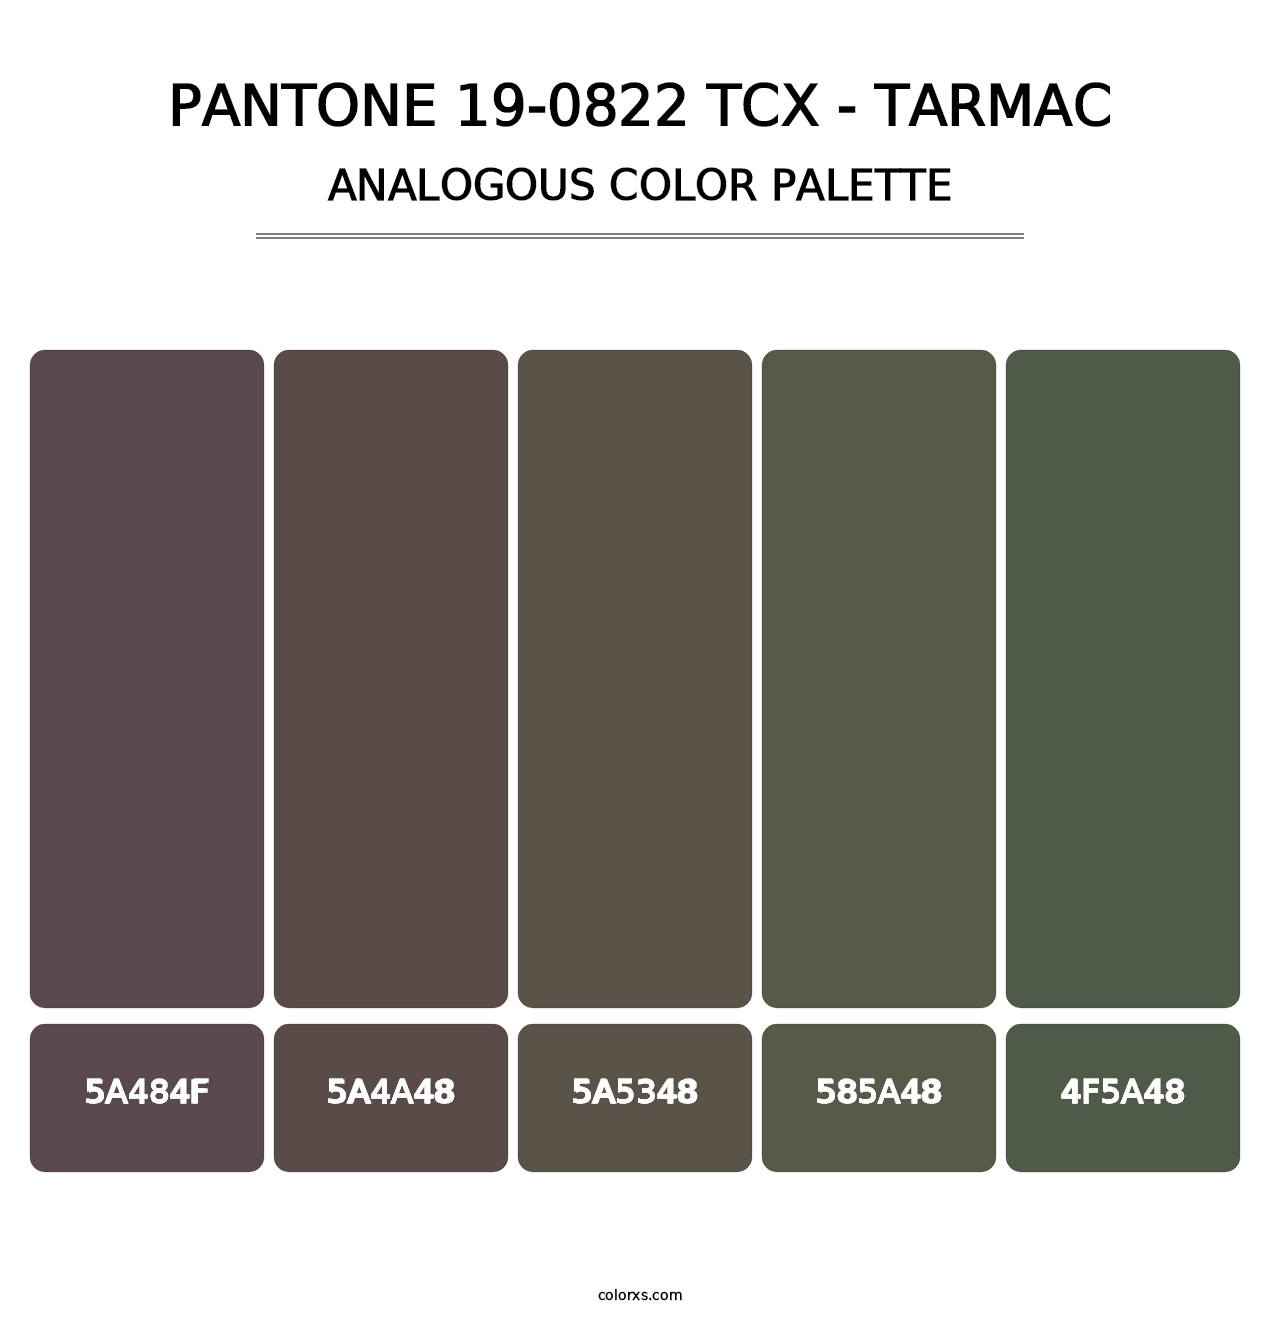 PANTONE 19-0822 TCX - Tarmac - Analogous Color Palette